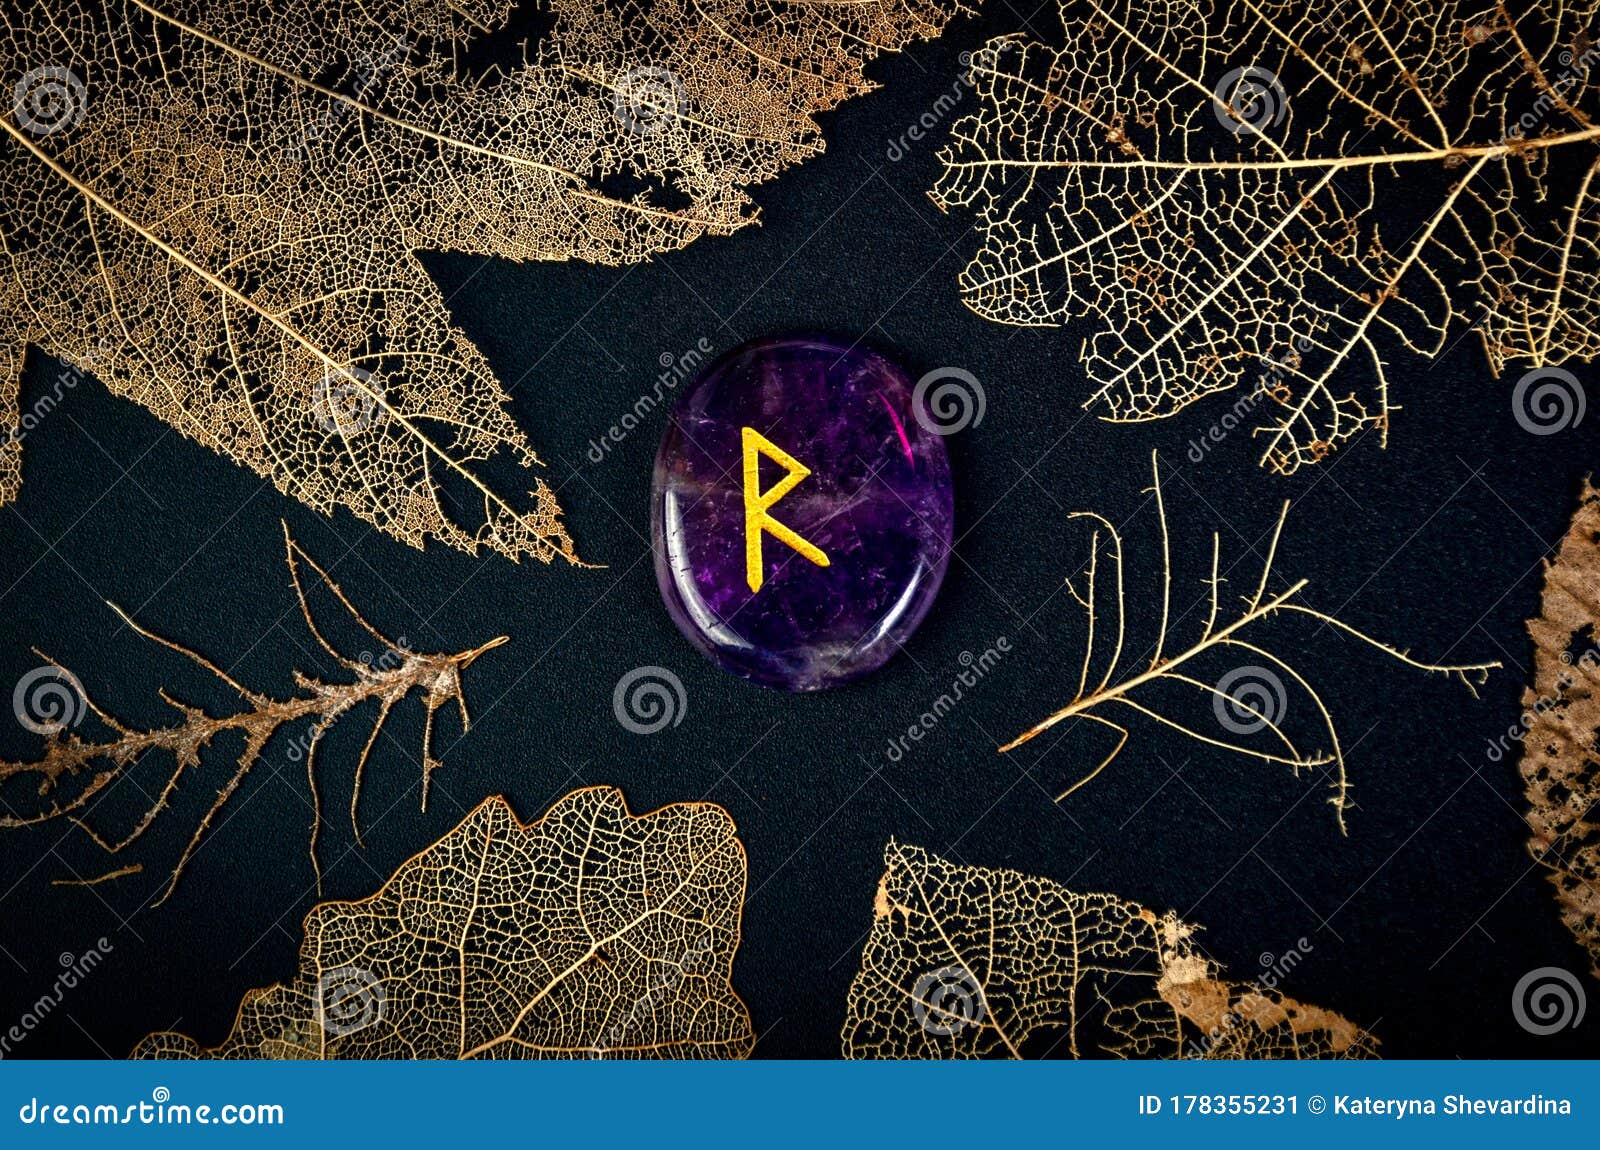 raido rune, prediction of the day